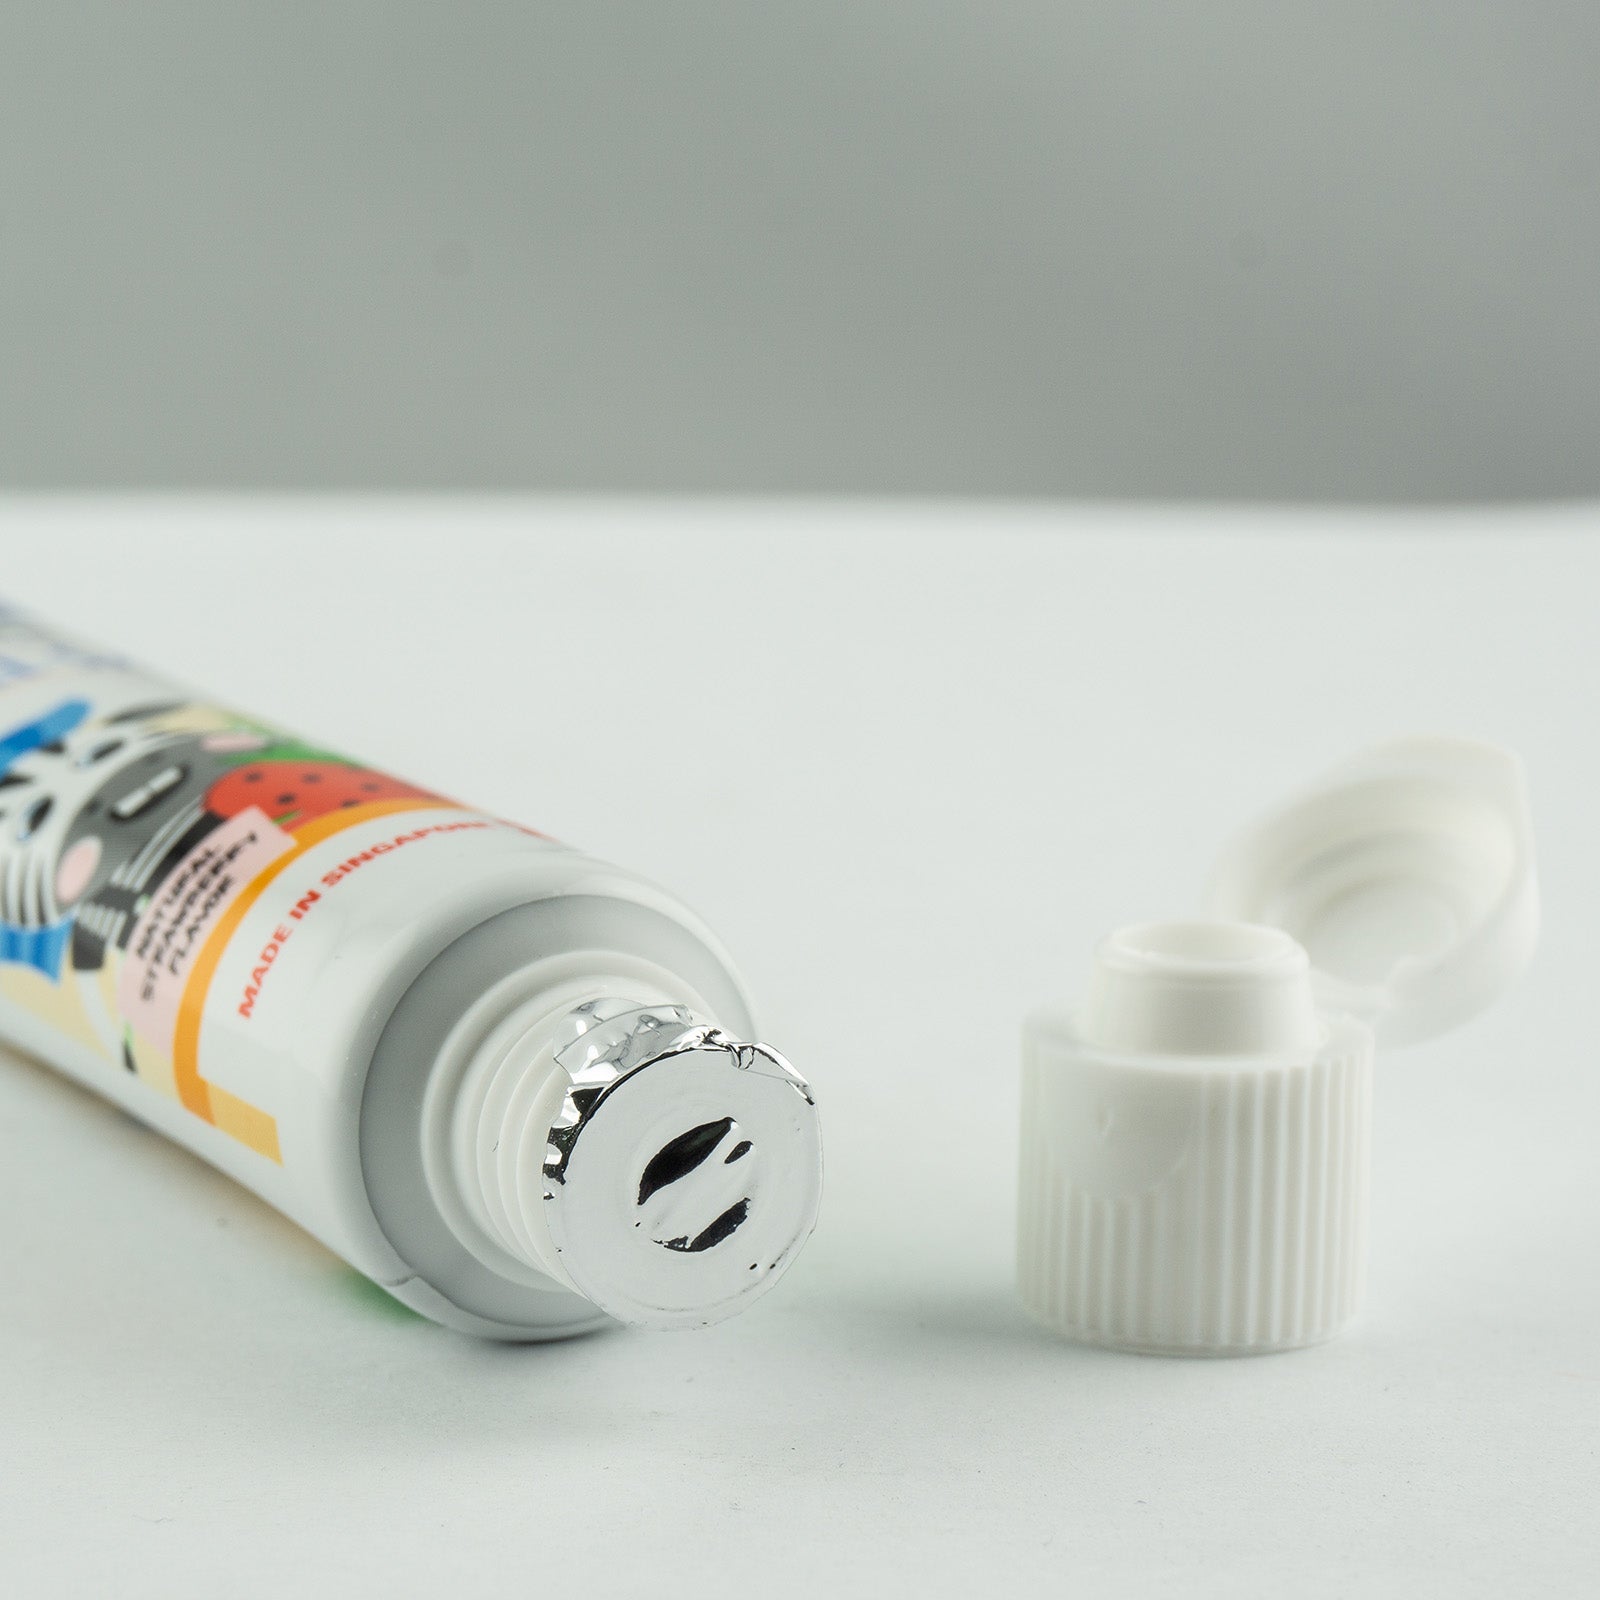 Enamel Safe Kids’ Fluoride Toothpaste (Strawberry) 45g